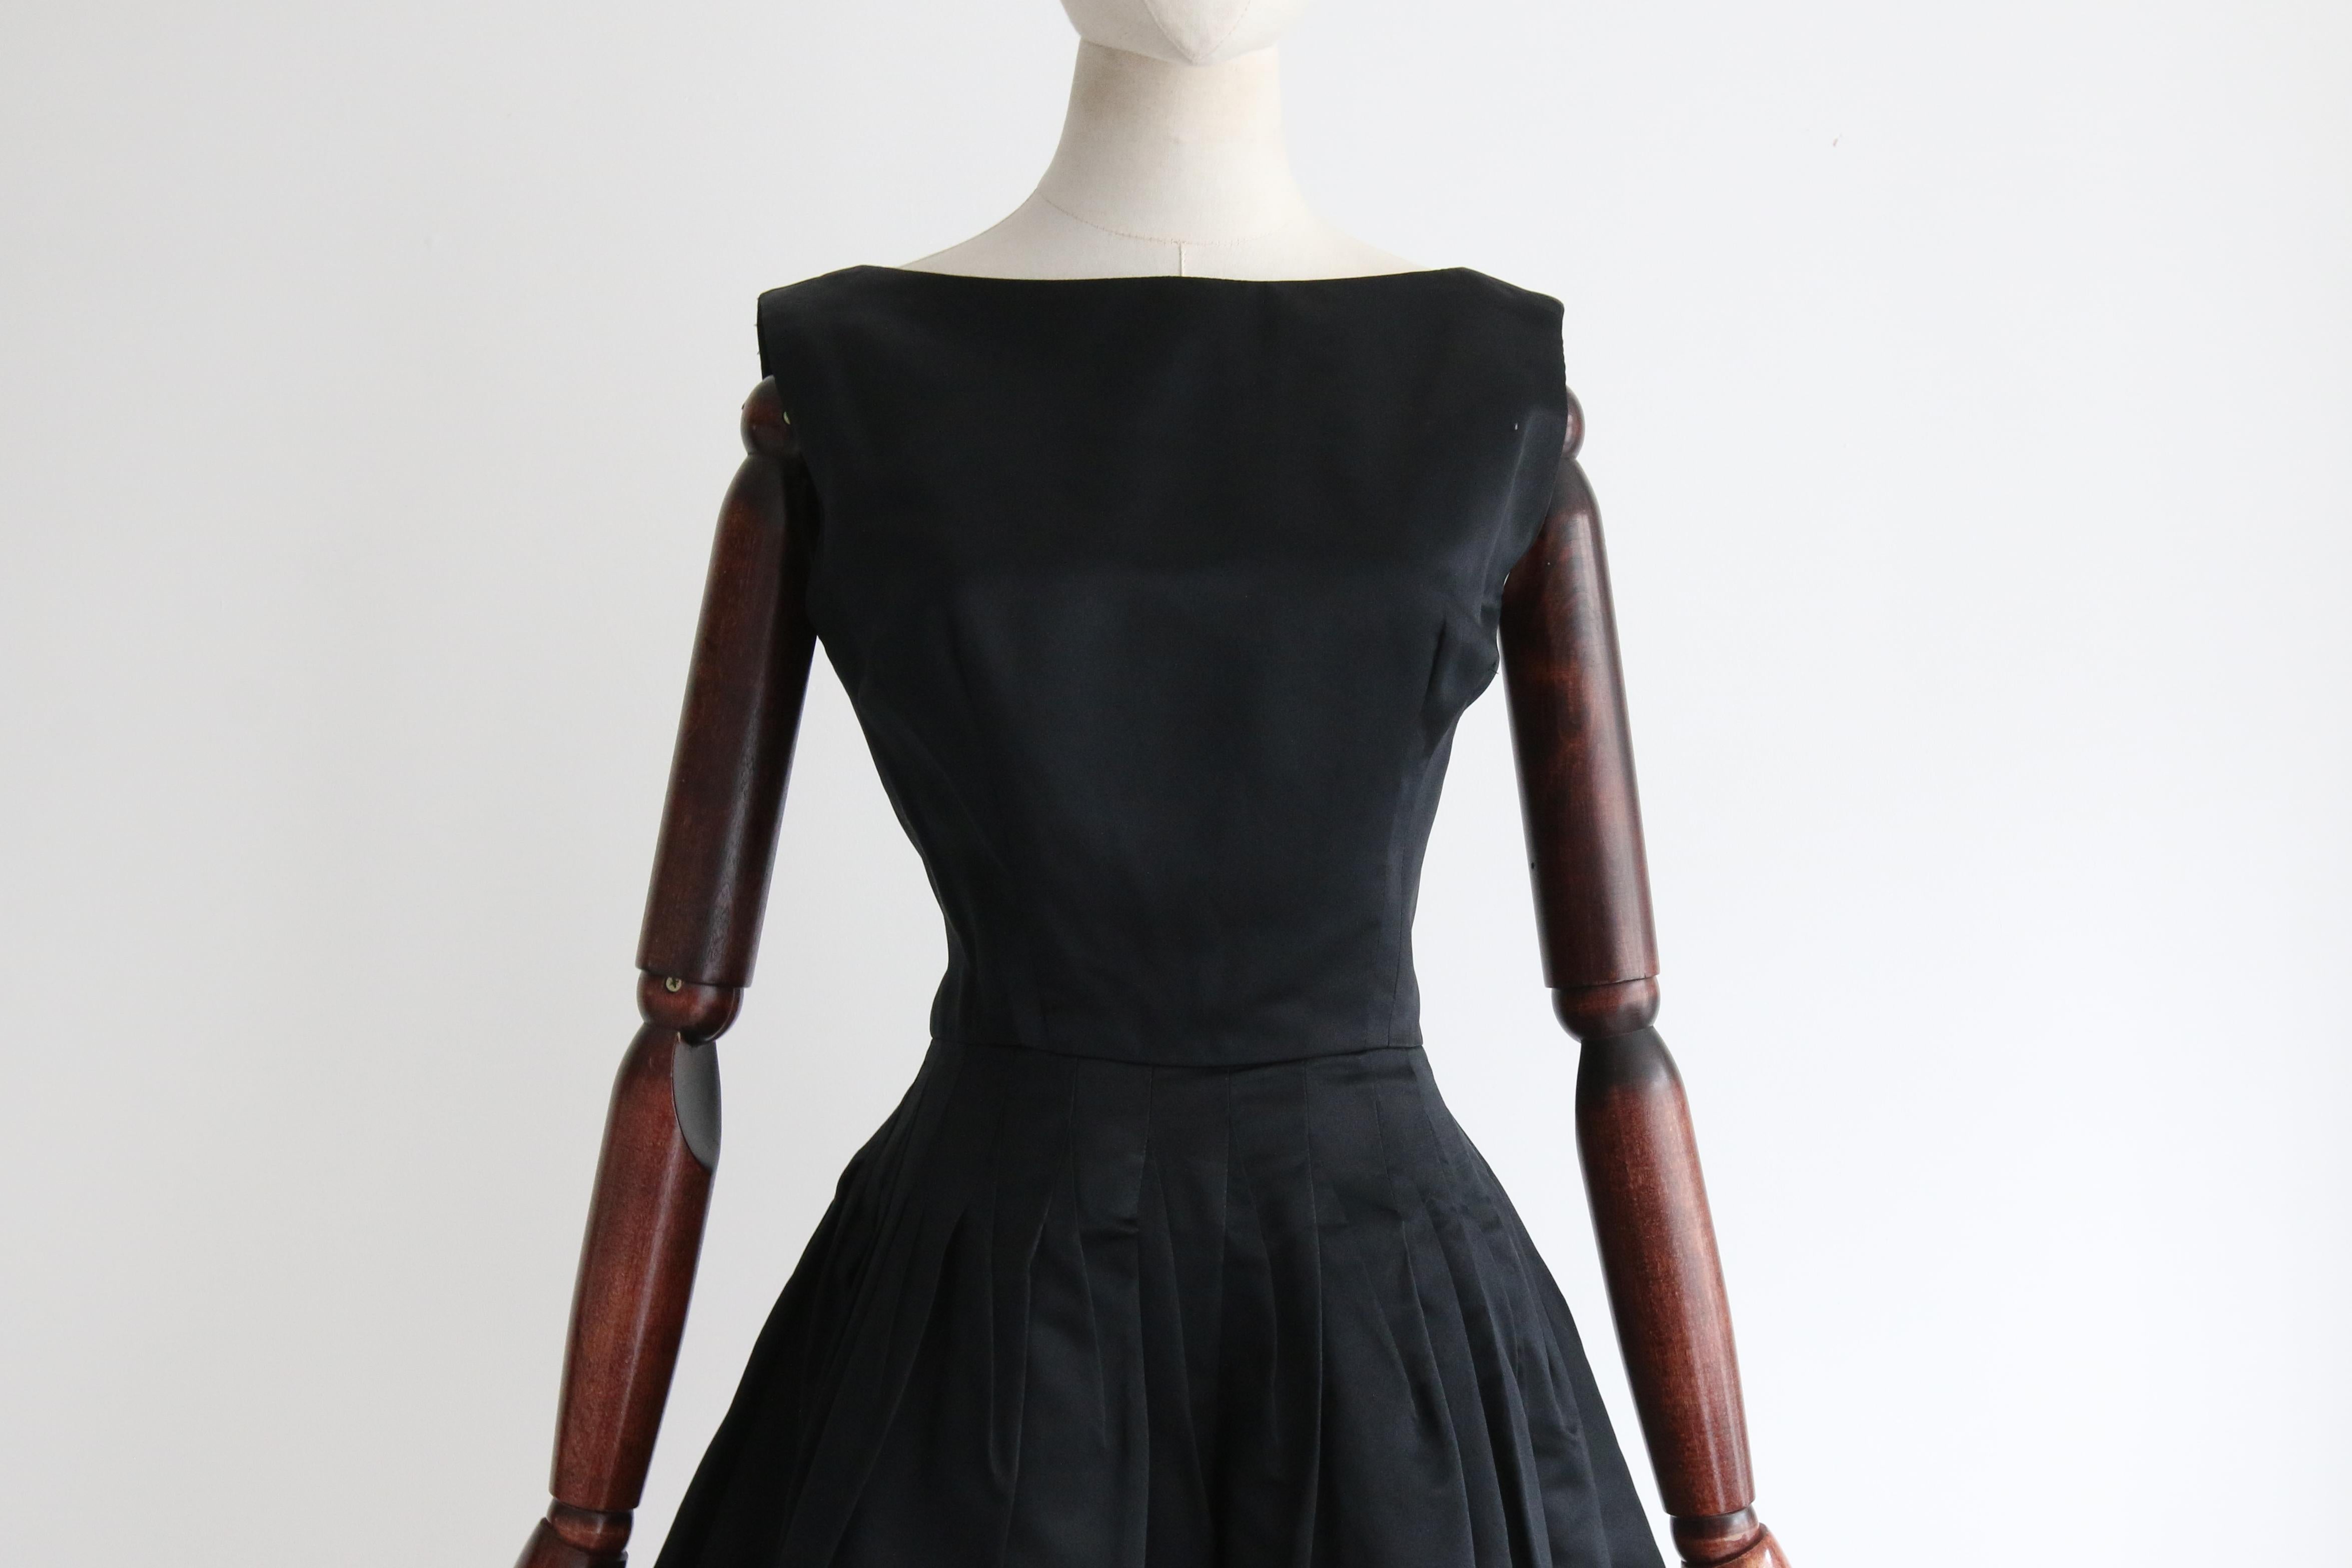 Women's 1950'S Black Satin Pointed Seam Dress UK 8 US 4 